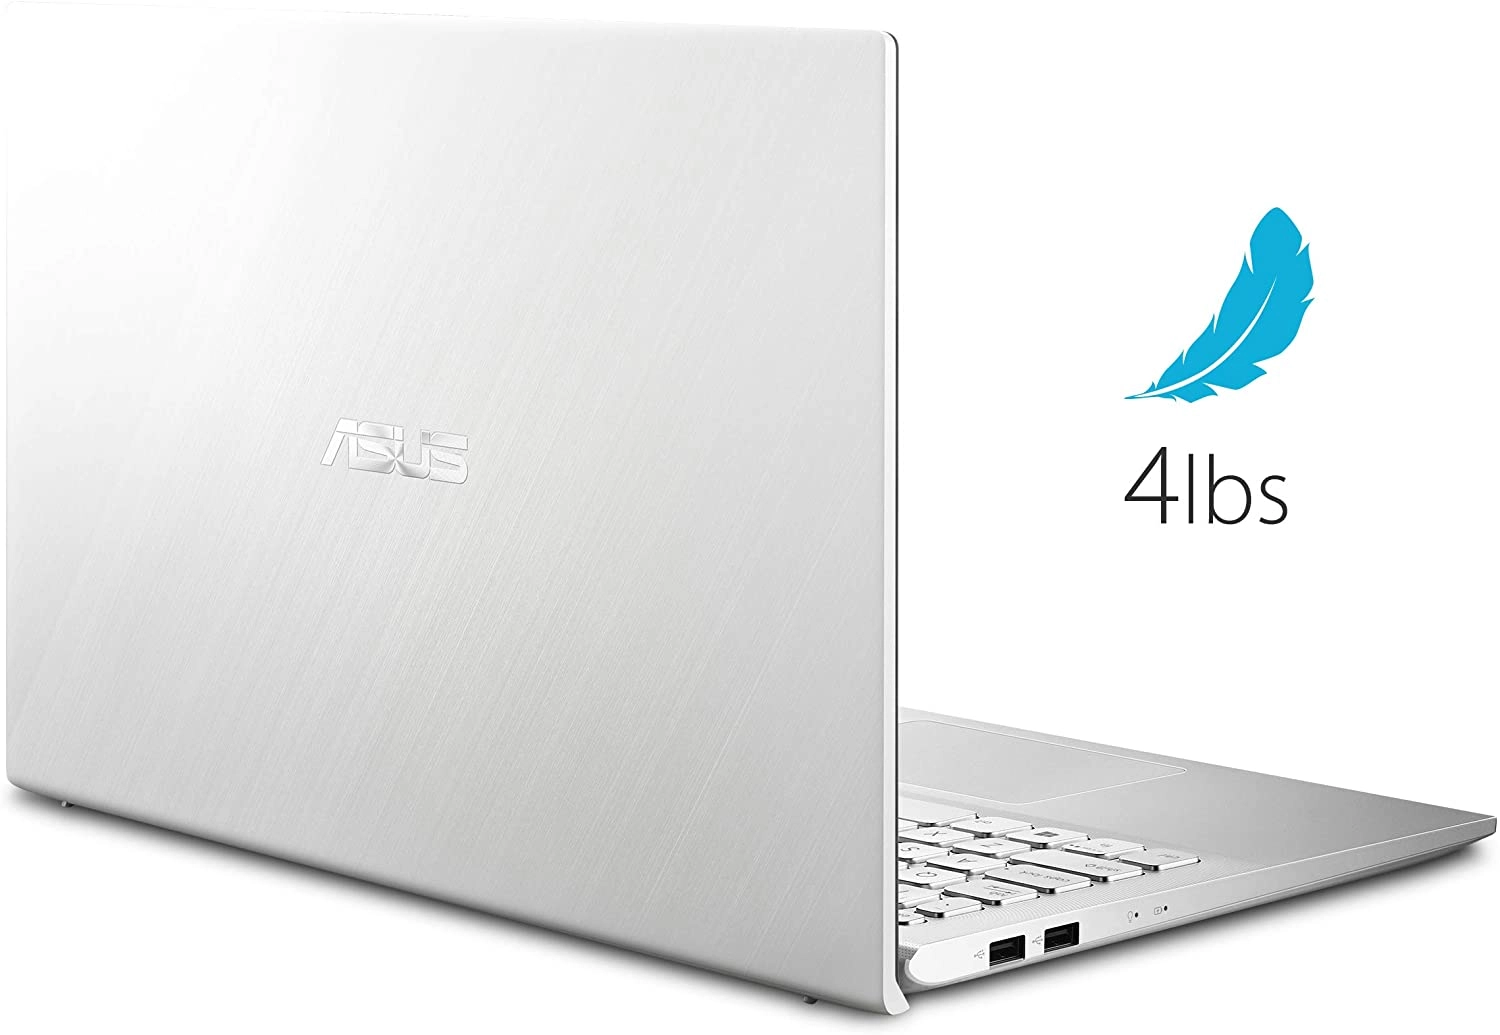 Asus VivoBook S15 laptop image